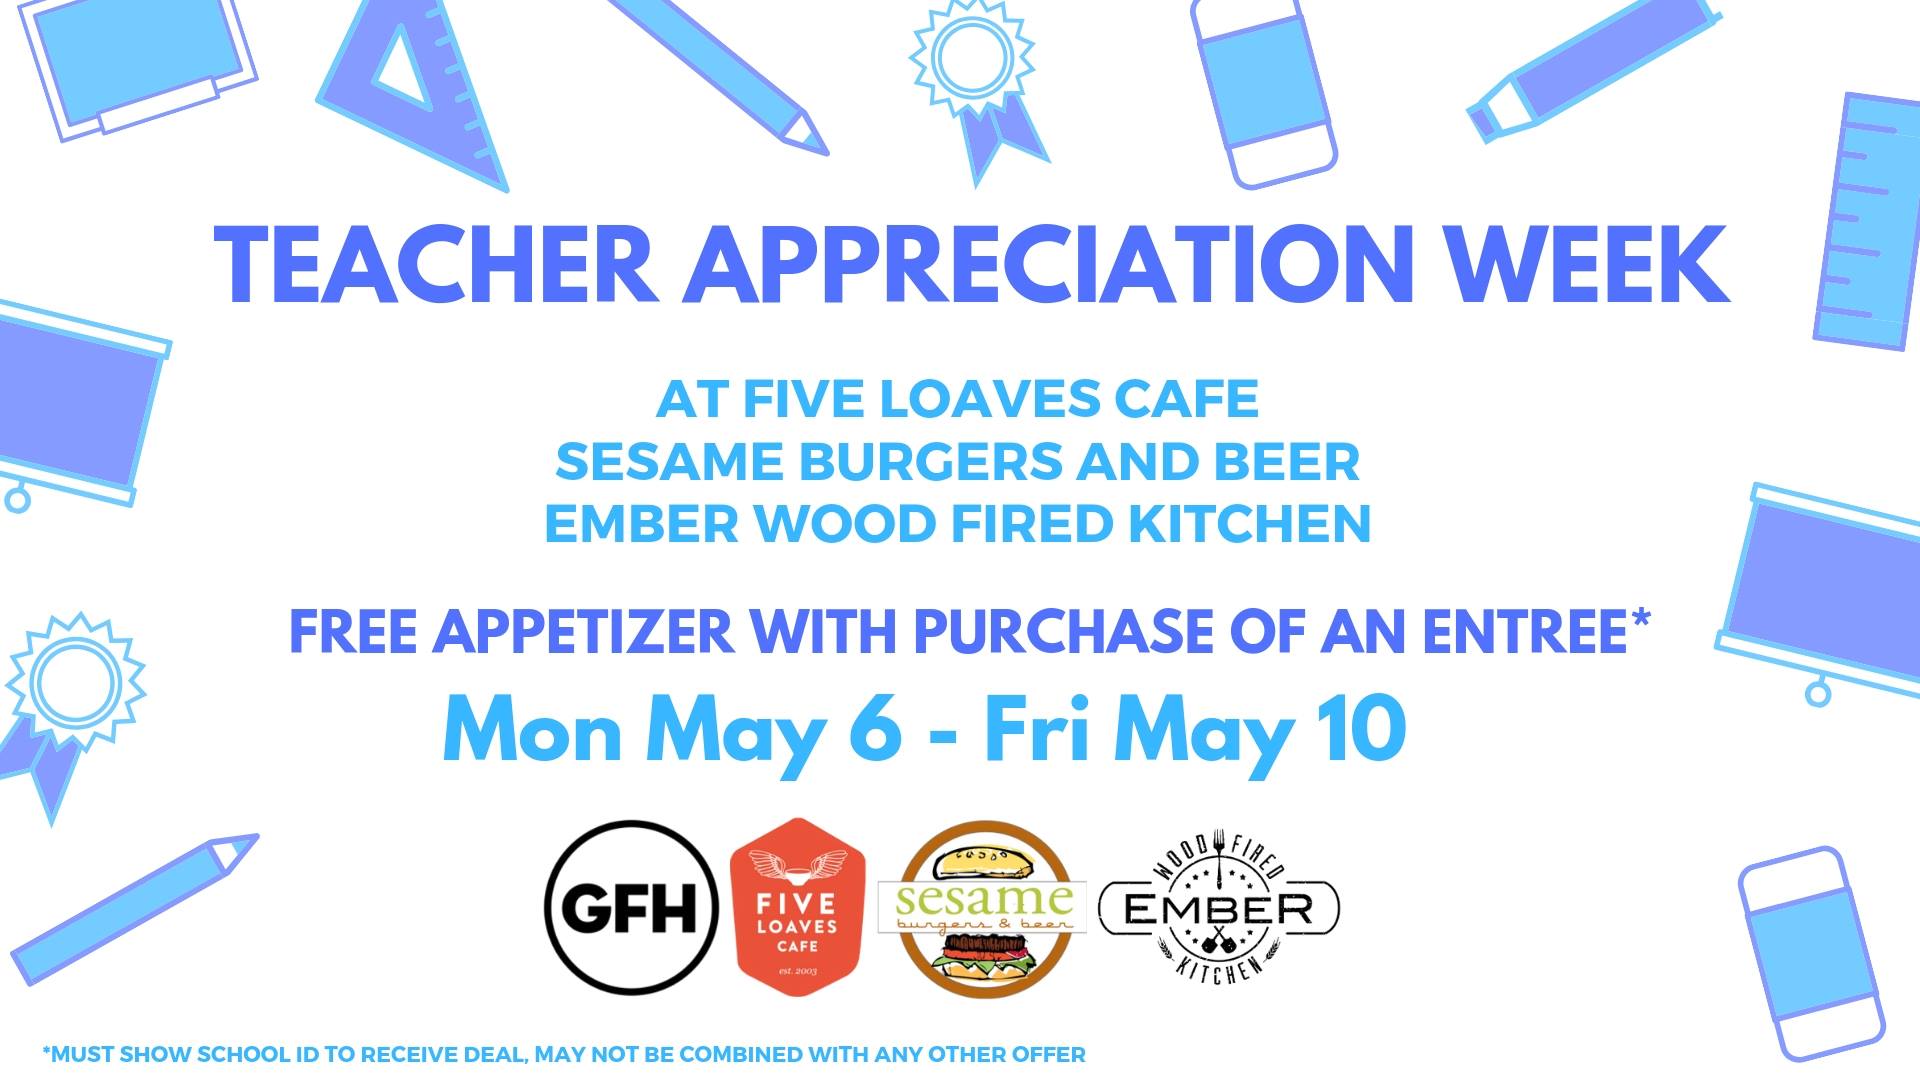 Teacher Appreciation Week at Five Loaves Cafe / Sesame Burger